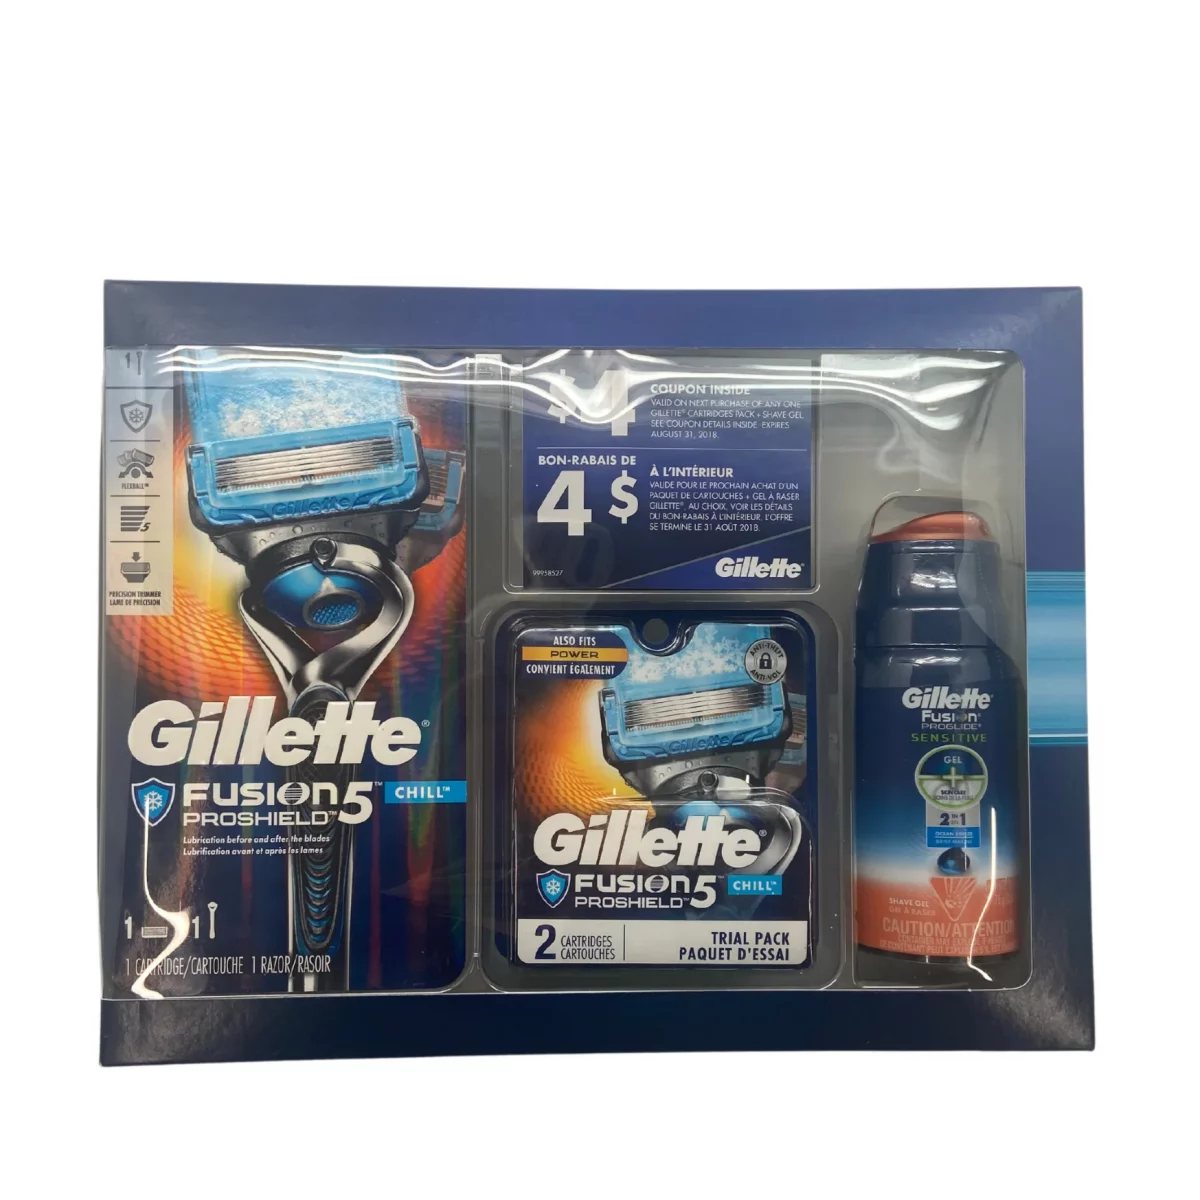 Gillette Fusion Proshield 5 Chill / Shaving kit / Razor **DEALS **